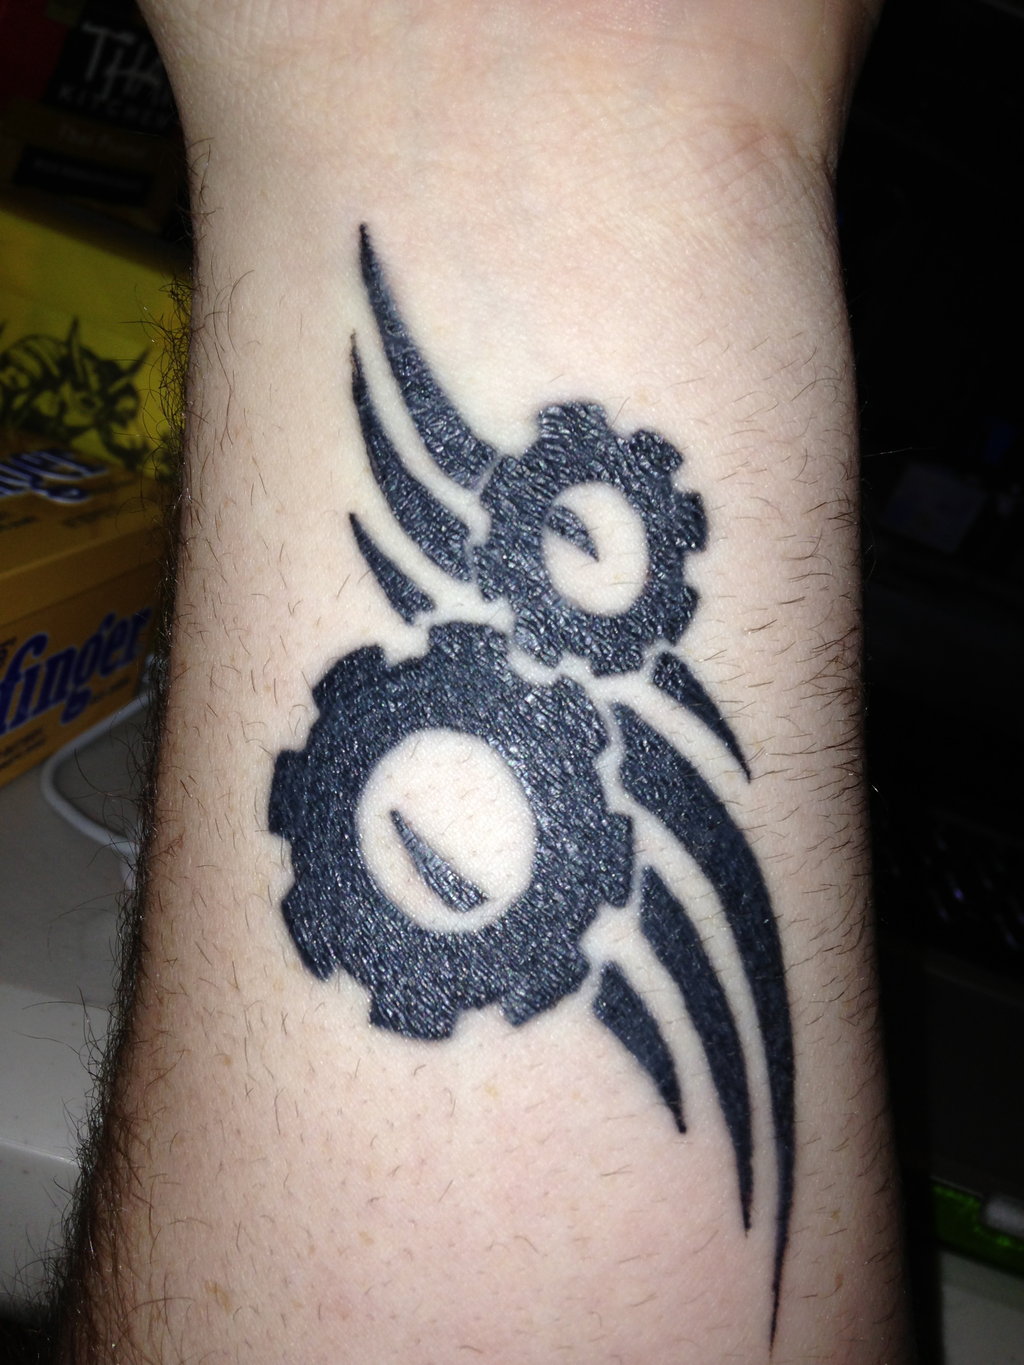 SteamPunk Tattoo On Wrist By Gambit337